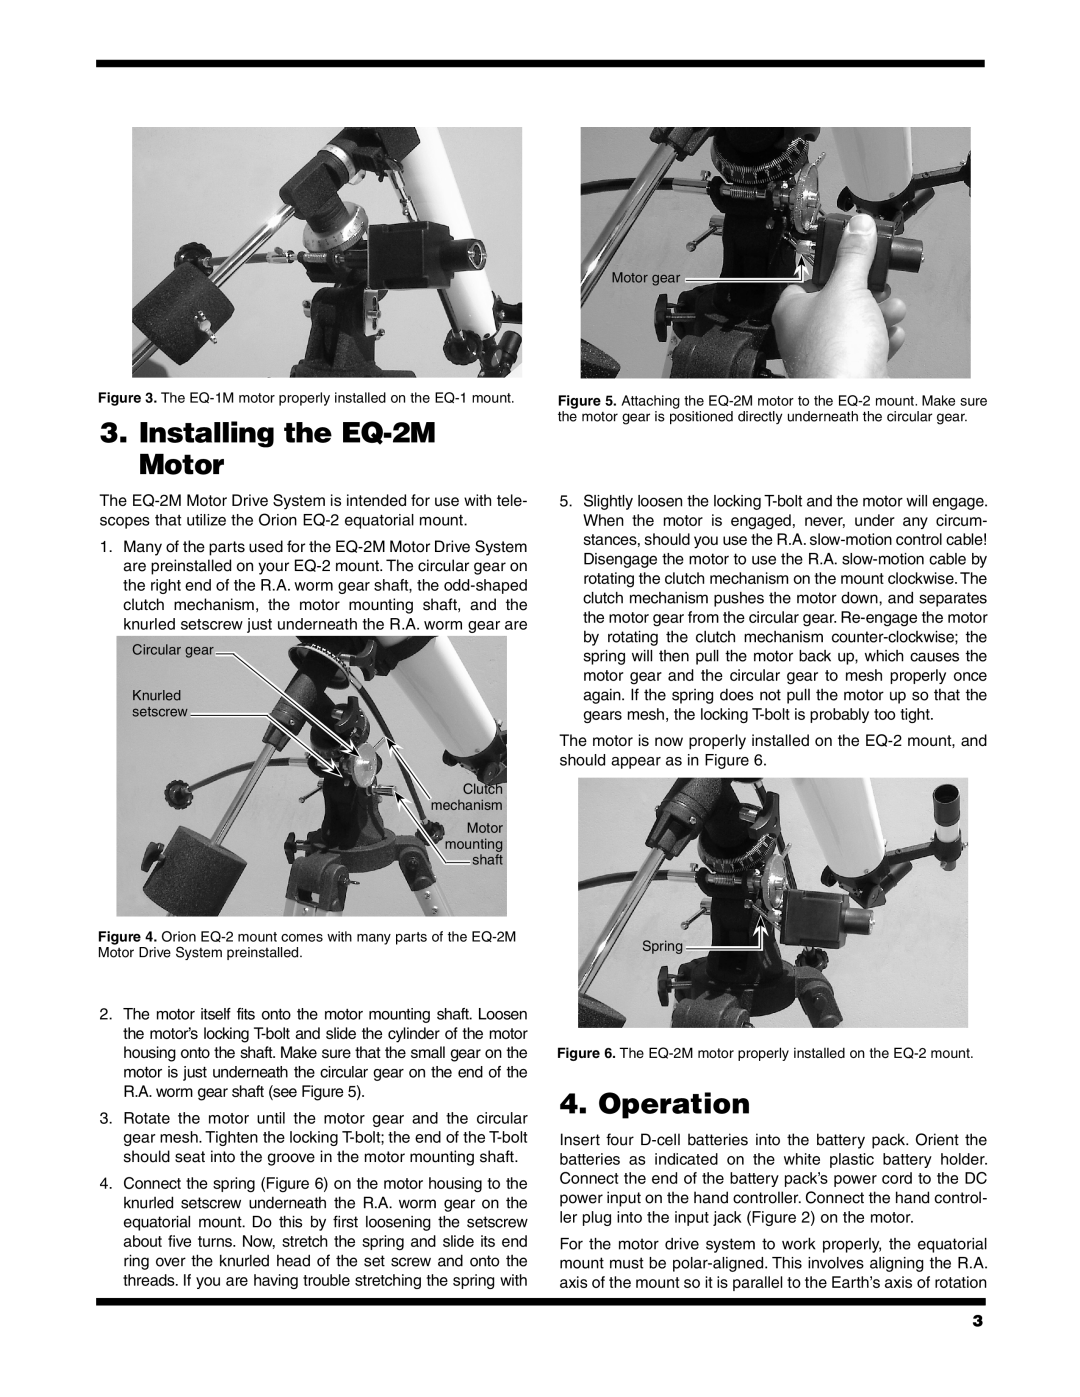 Orion EQ-1M instruction manual Installing the EQ-2M Motor, Operation 